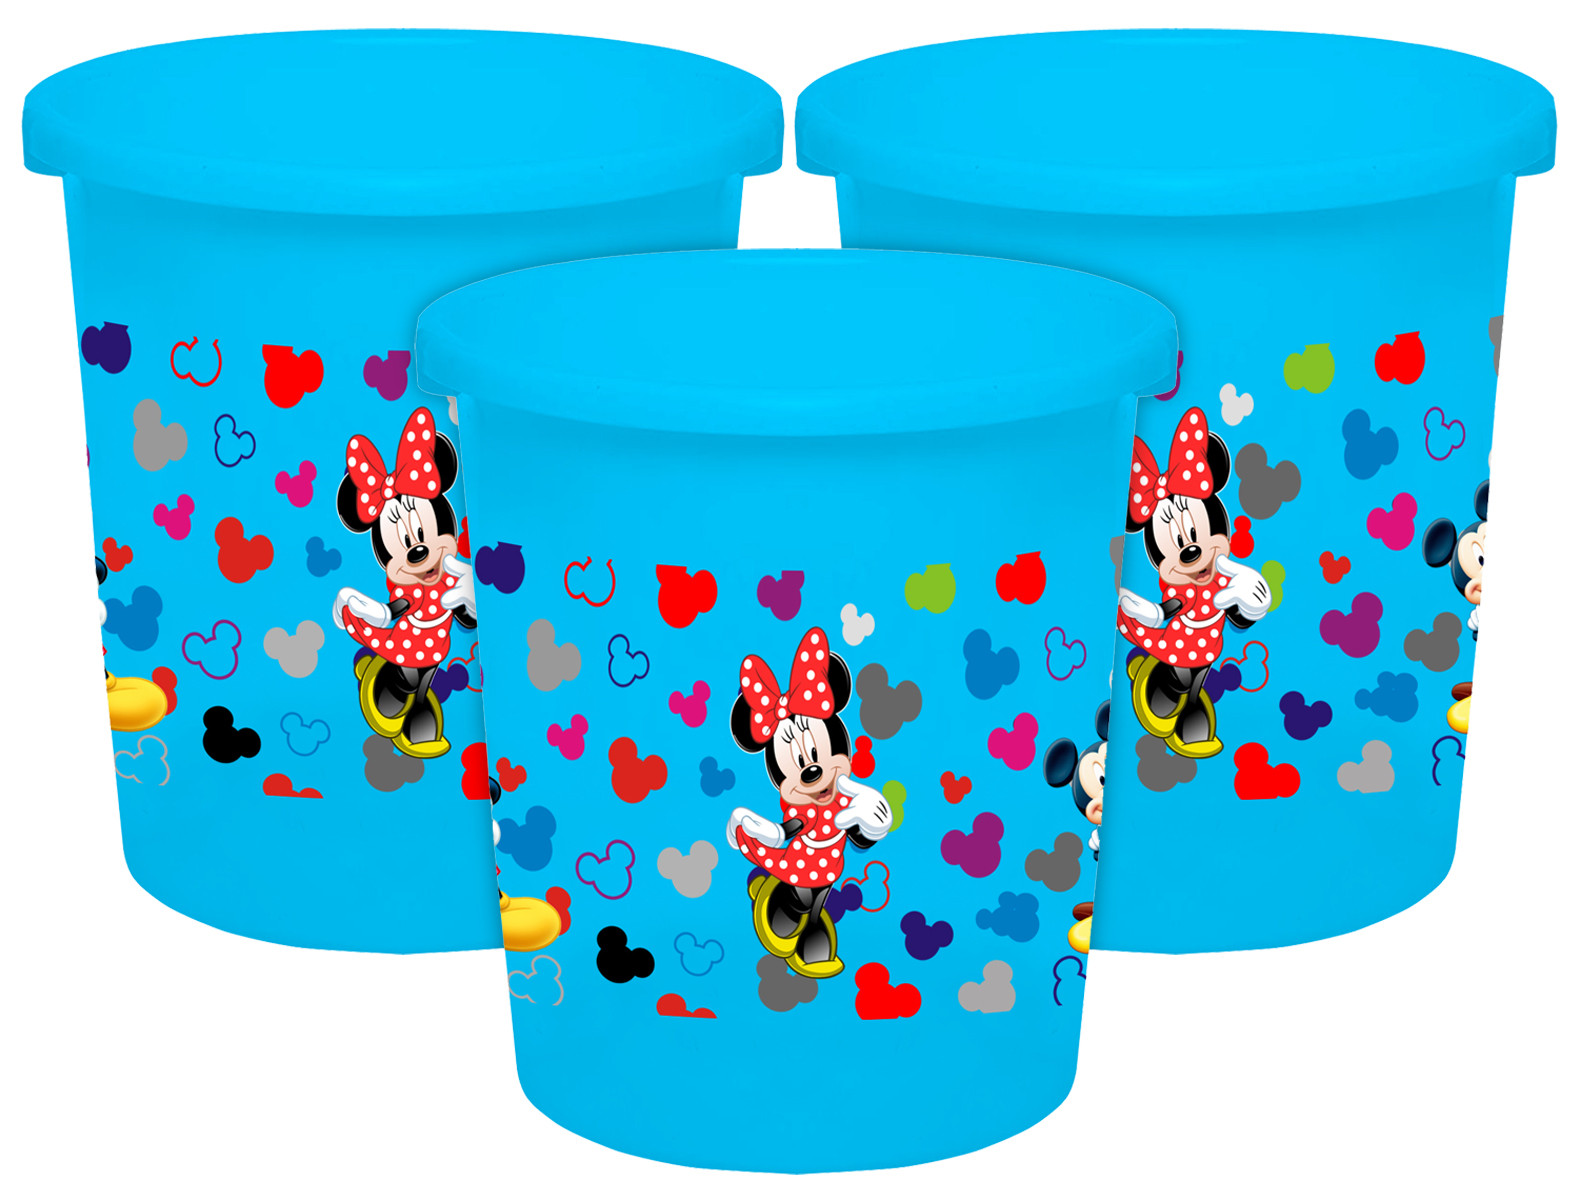 Kuber Industries Disney Team Mickey Print Plastic Garbage Waste Dustbin/Recycling Bin for Home, Office, Factory, 5 Liters (Blue) -HS_35_KUBMART17327